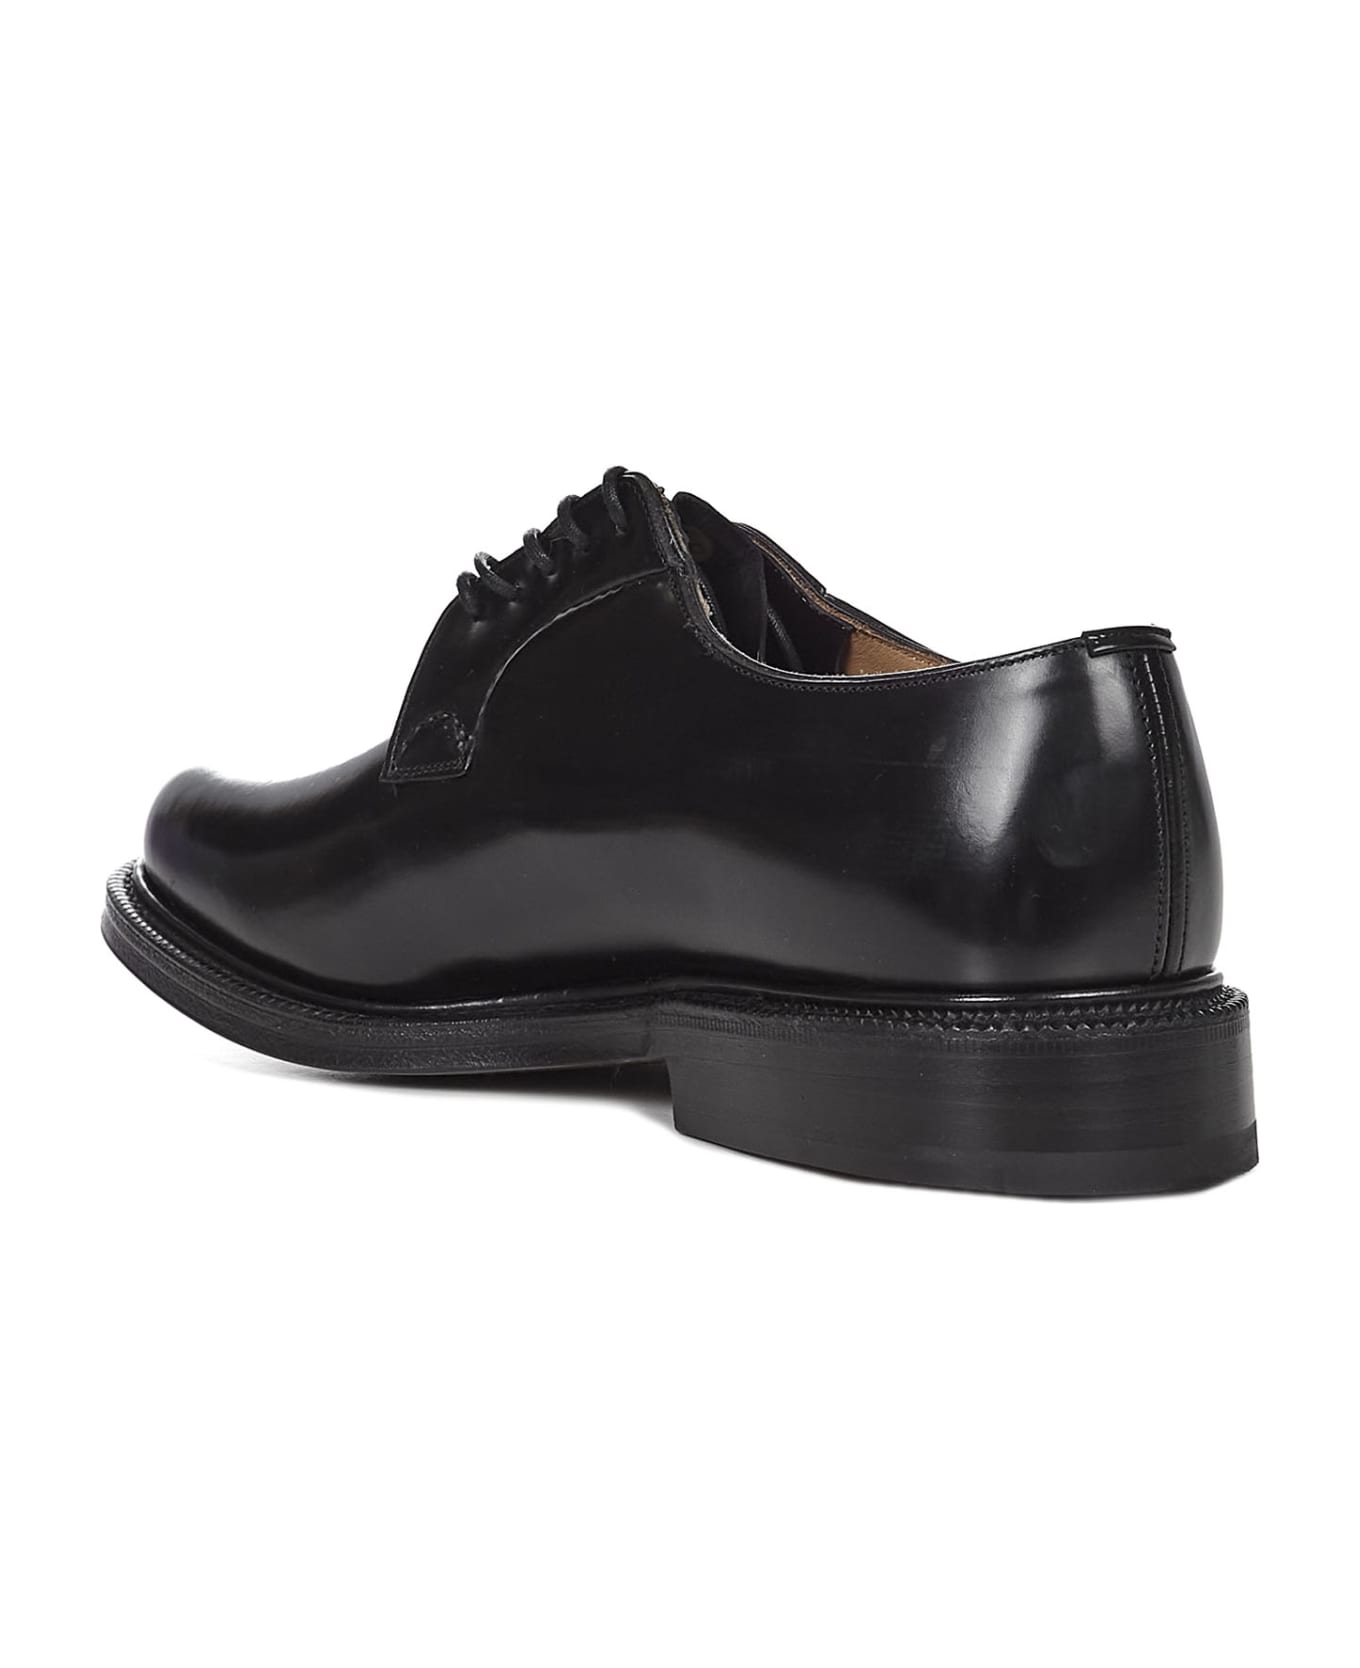 Church's Derby Shoes - Black